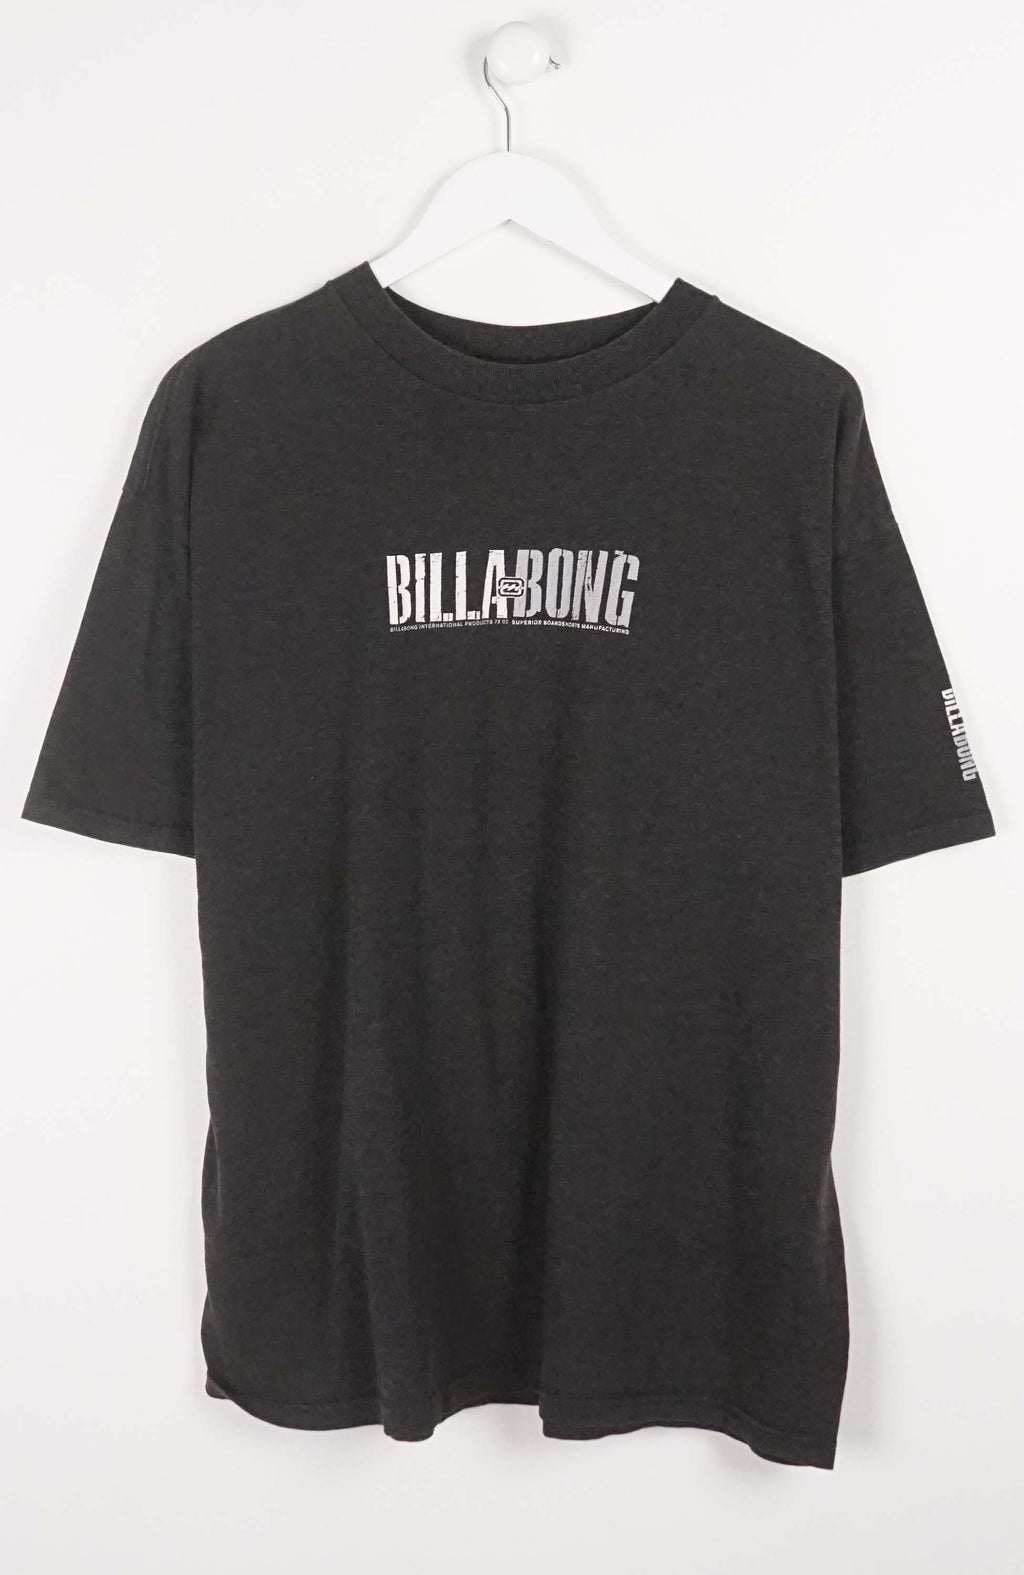 VINTAGE BILLABONG T-SHIRT (XL)